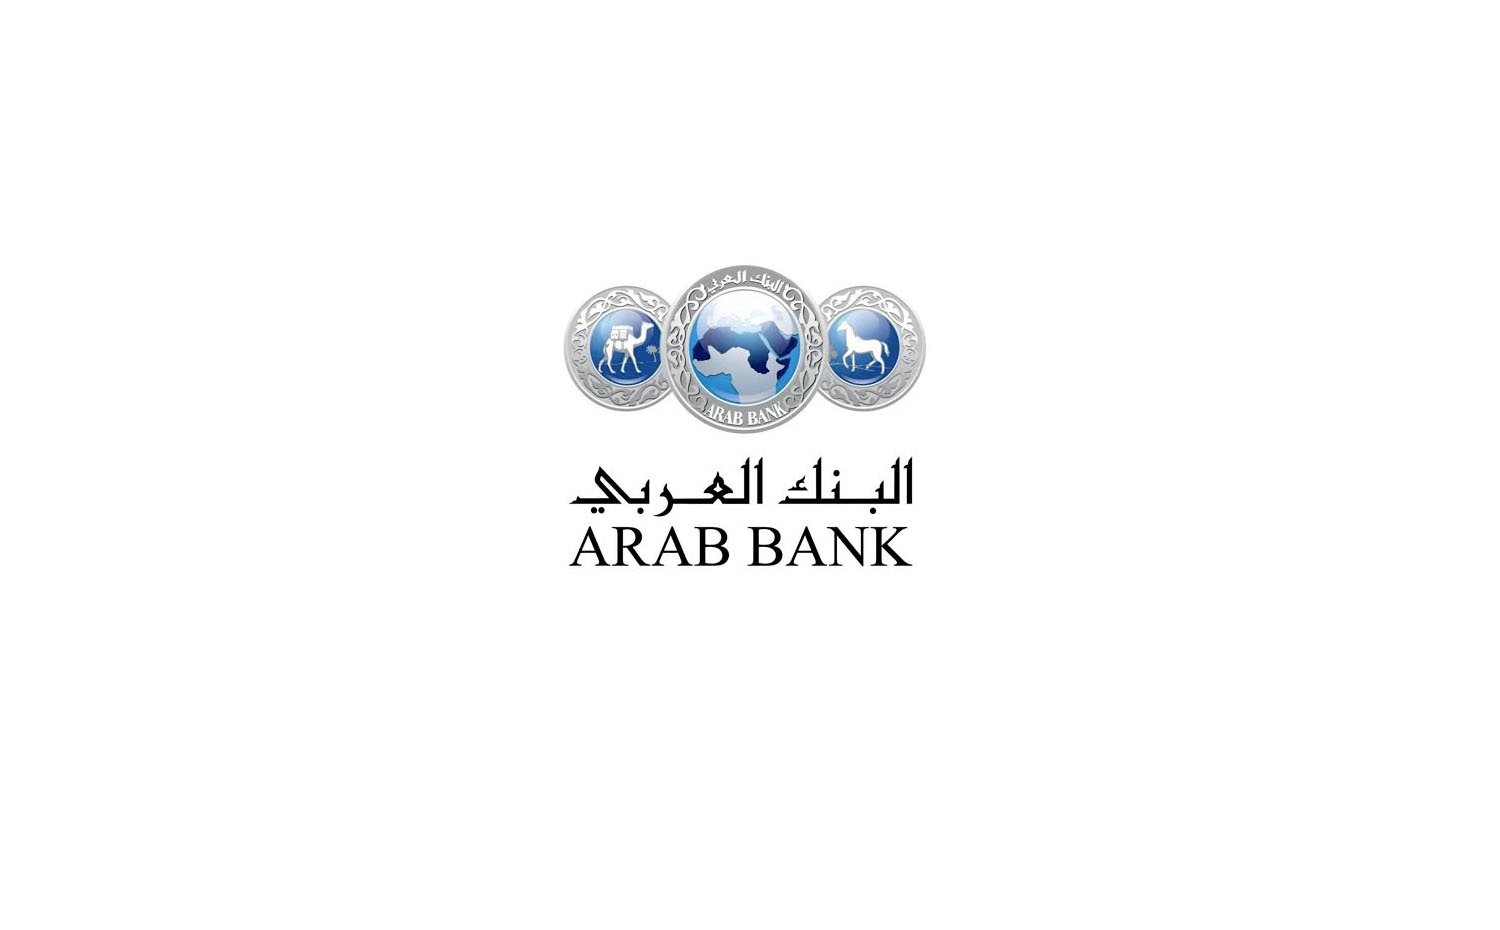 Arab Bank successfully holds Jordan’s first virtual General Assembly Meeting (GAM)